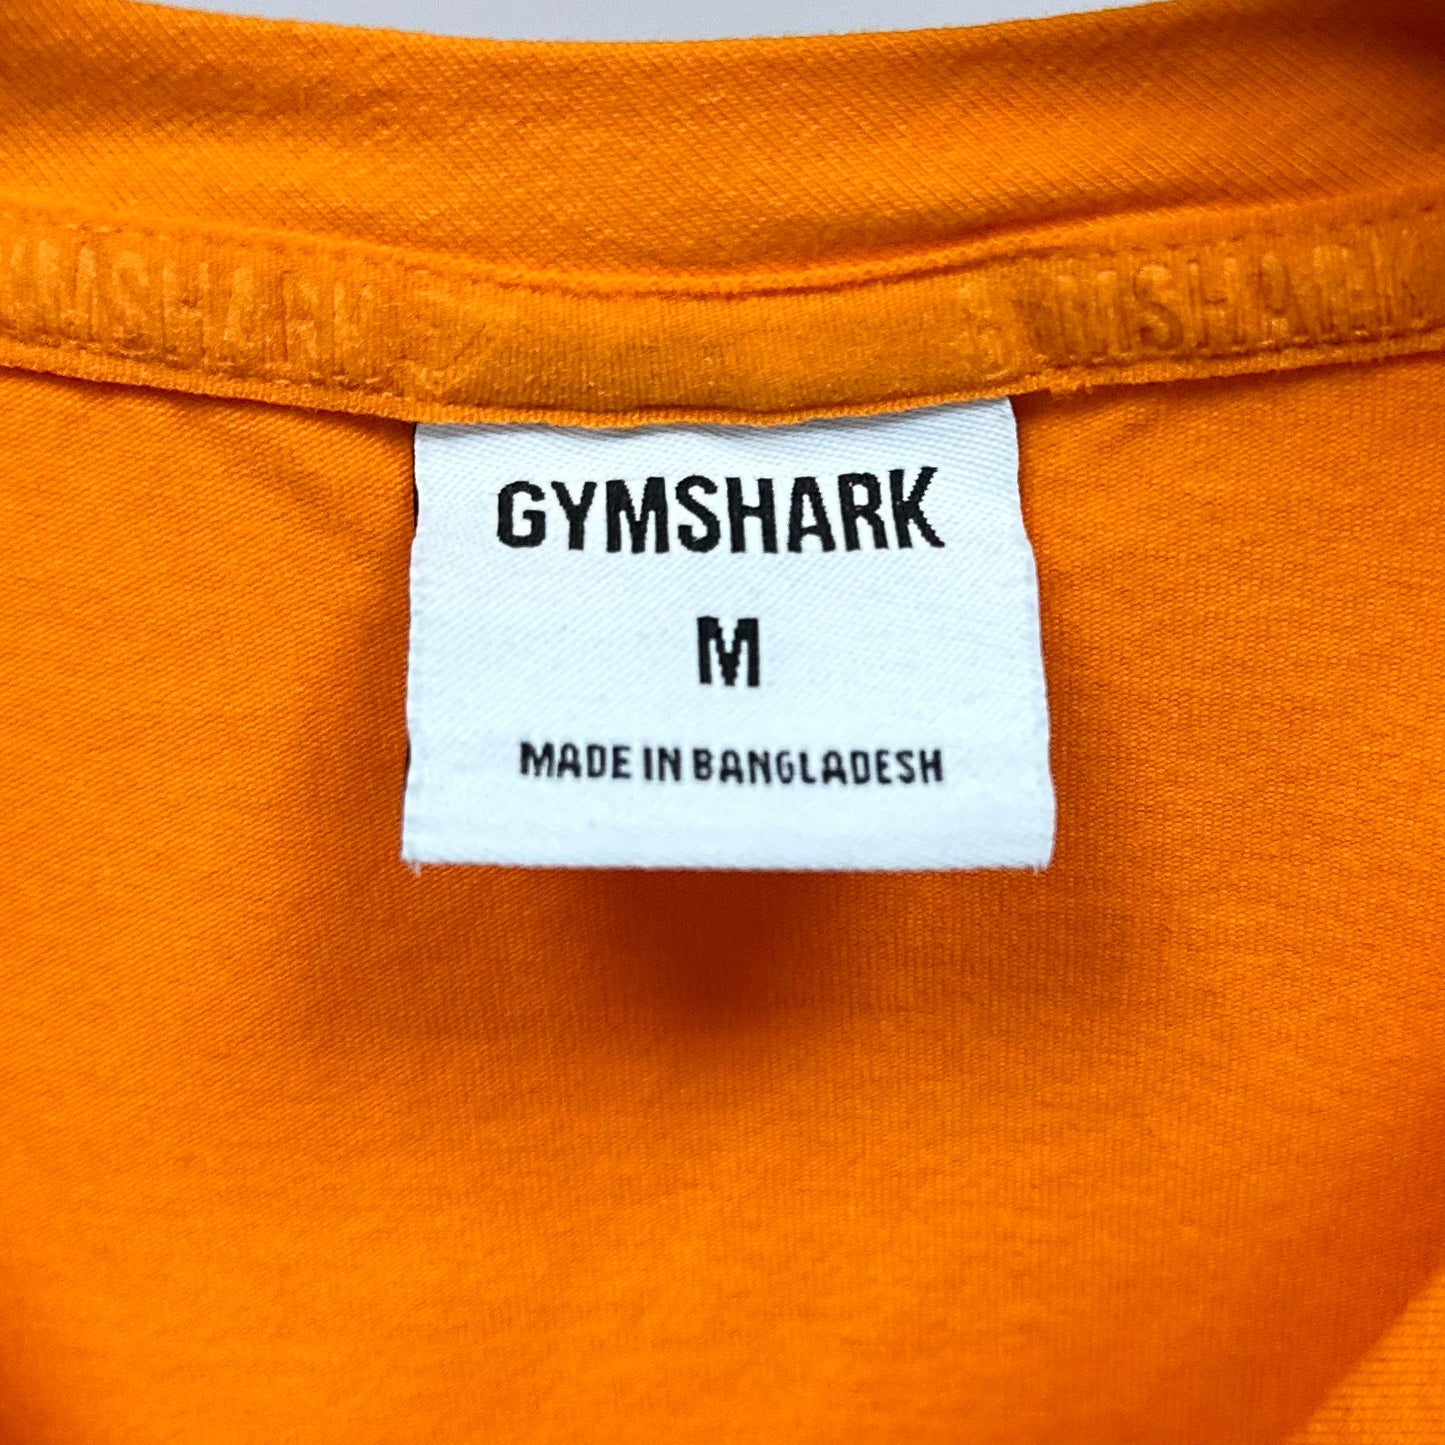 Camiseta de entrenamiento cuello redondo Gymshark 🏋🏽 color naranja intenso manga corta Talla M